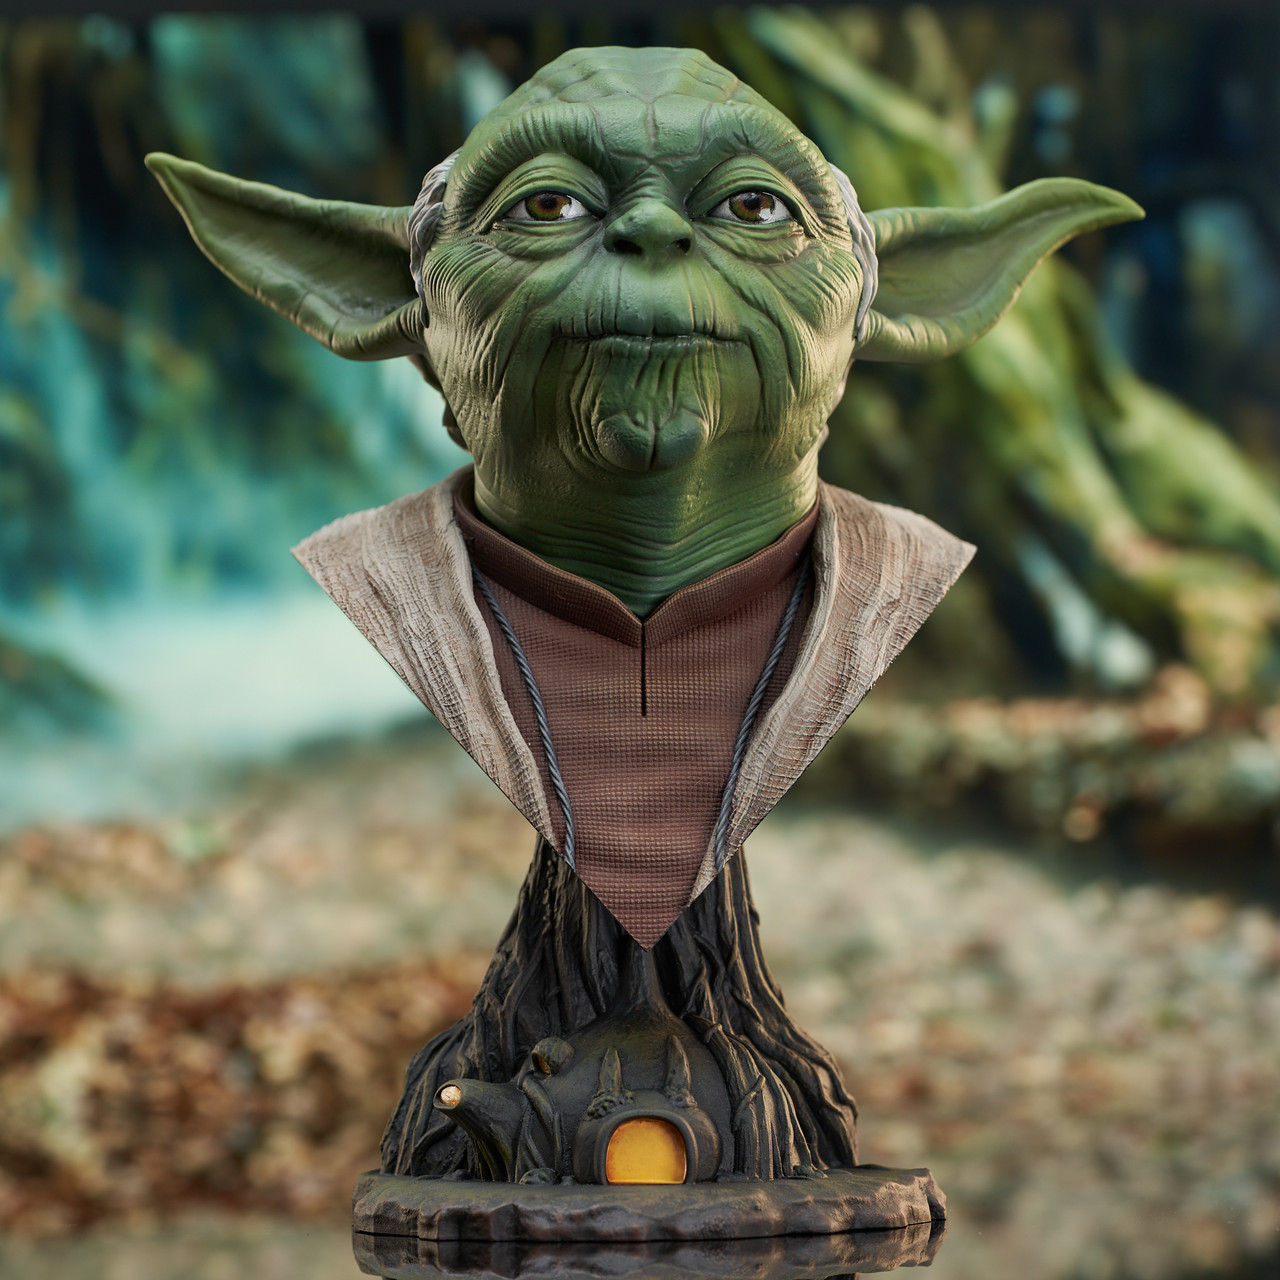 Star Wars Legendary Jedi Master Yoda 